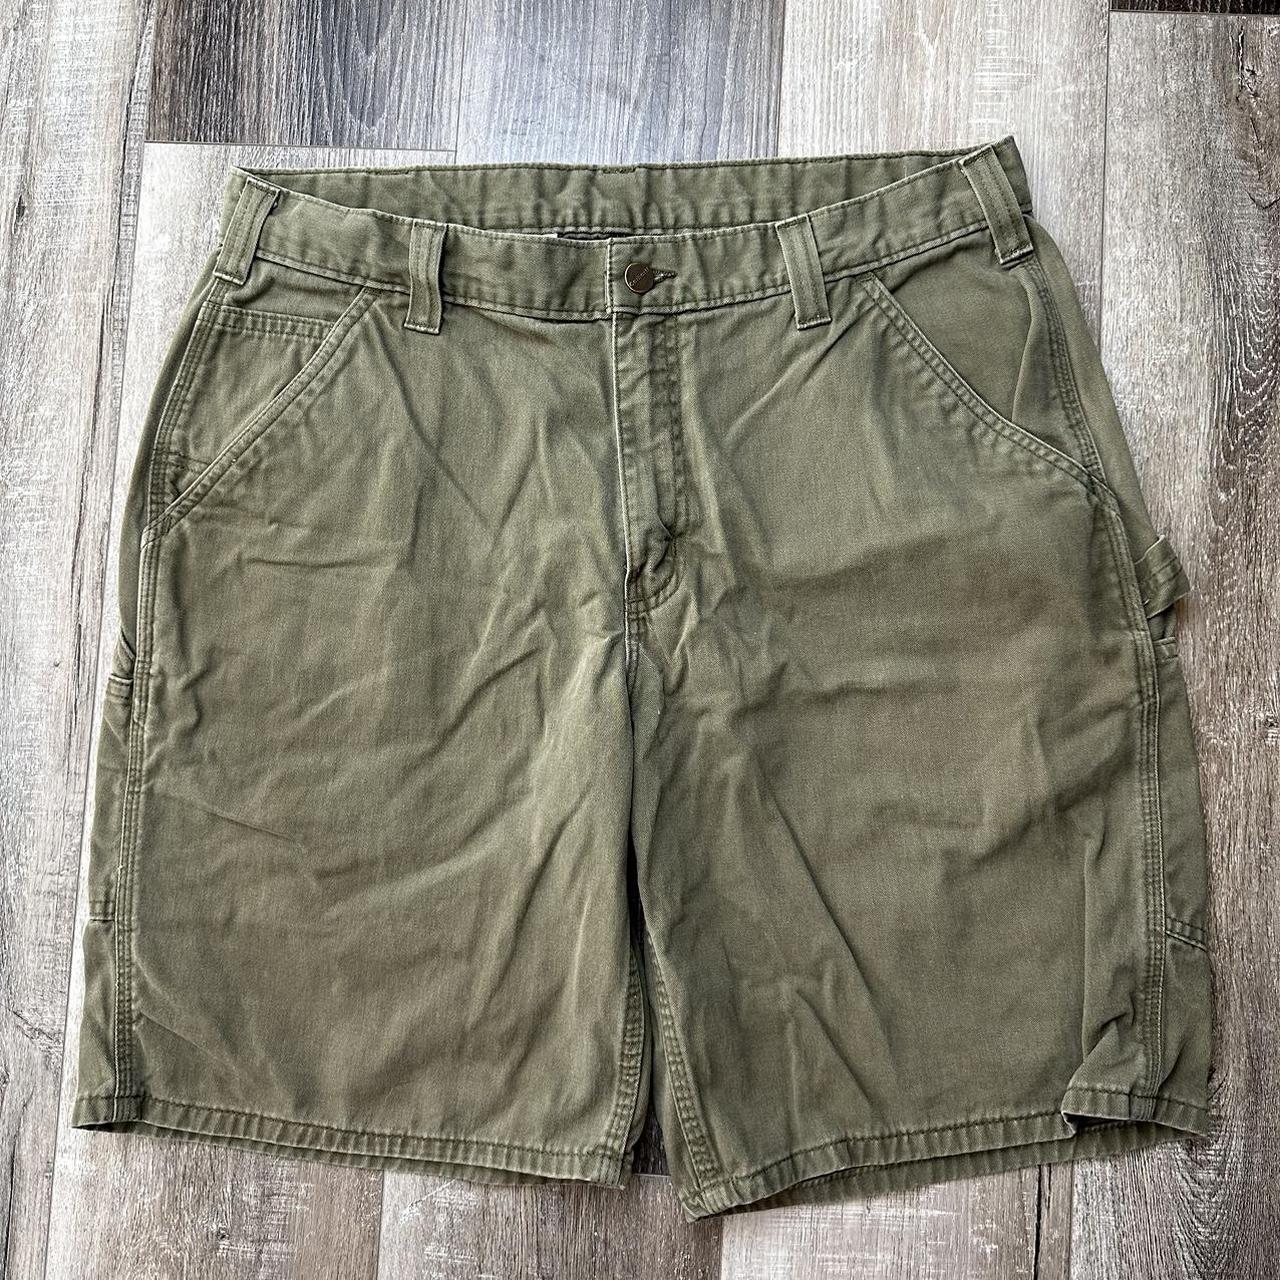 Carhartt Men's Green and Khaki Shorts | Depop